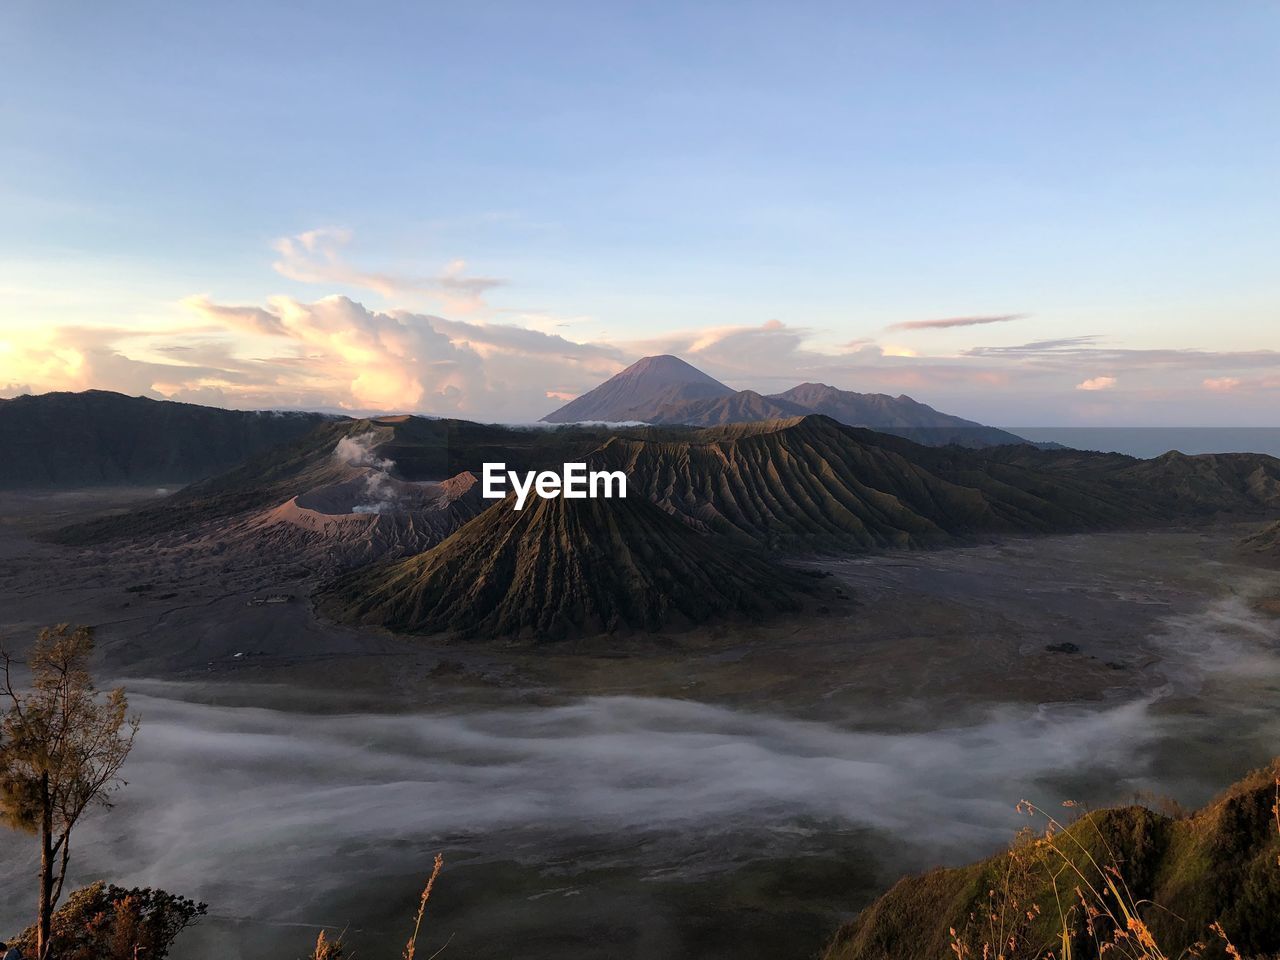 Volcanic landscape against sky